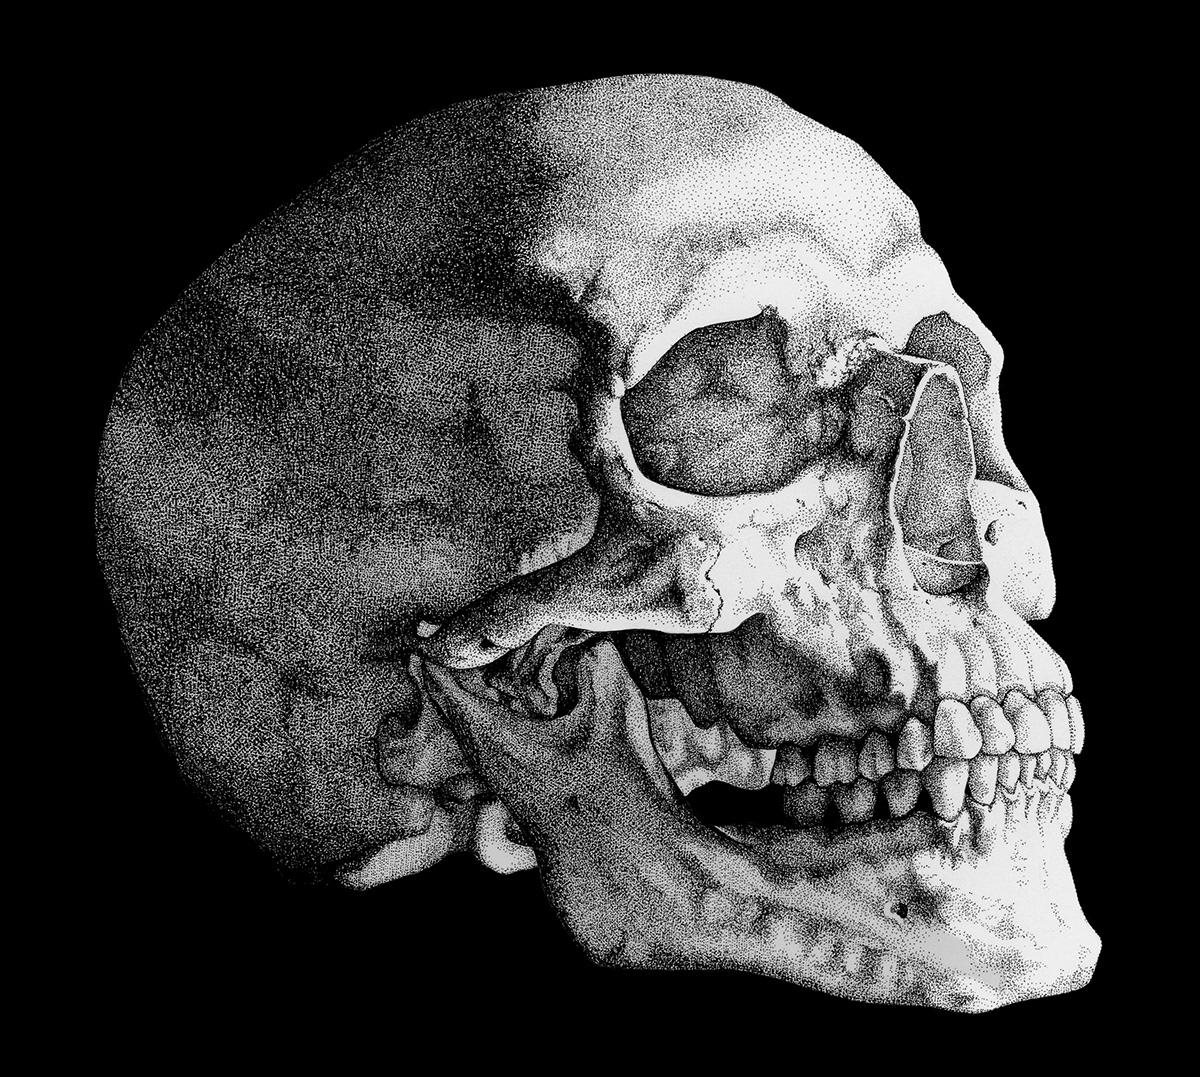 skull evolution Scientific American magazine scientific illustration pen and ink editorial